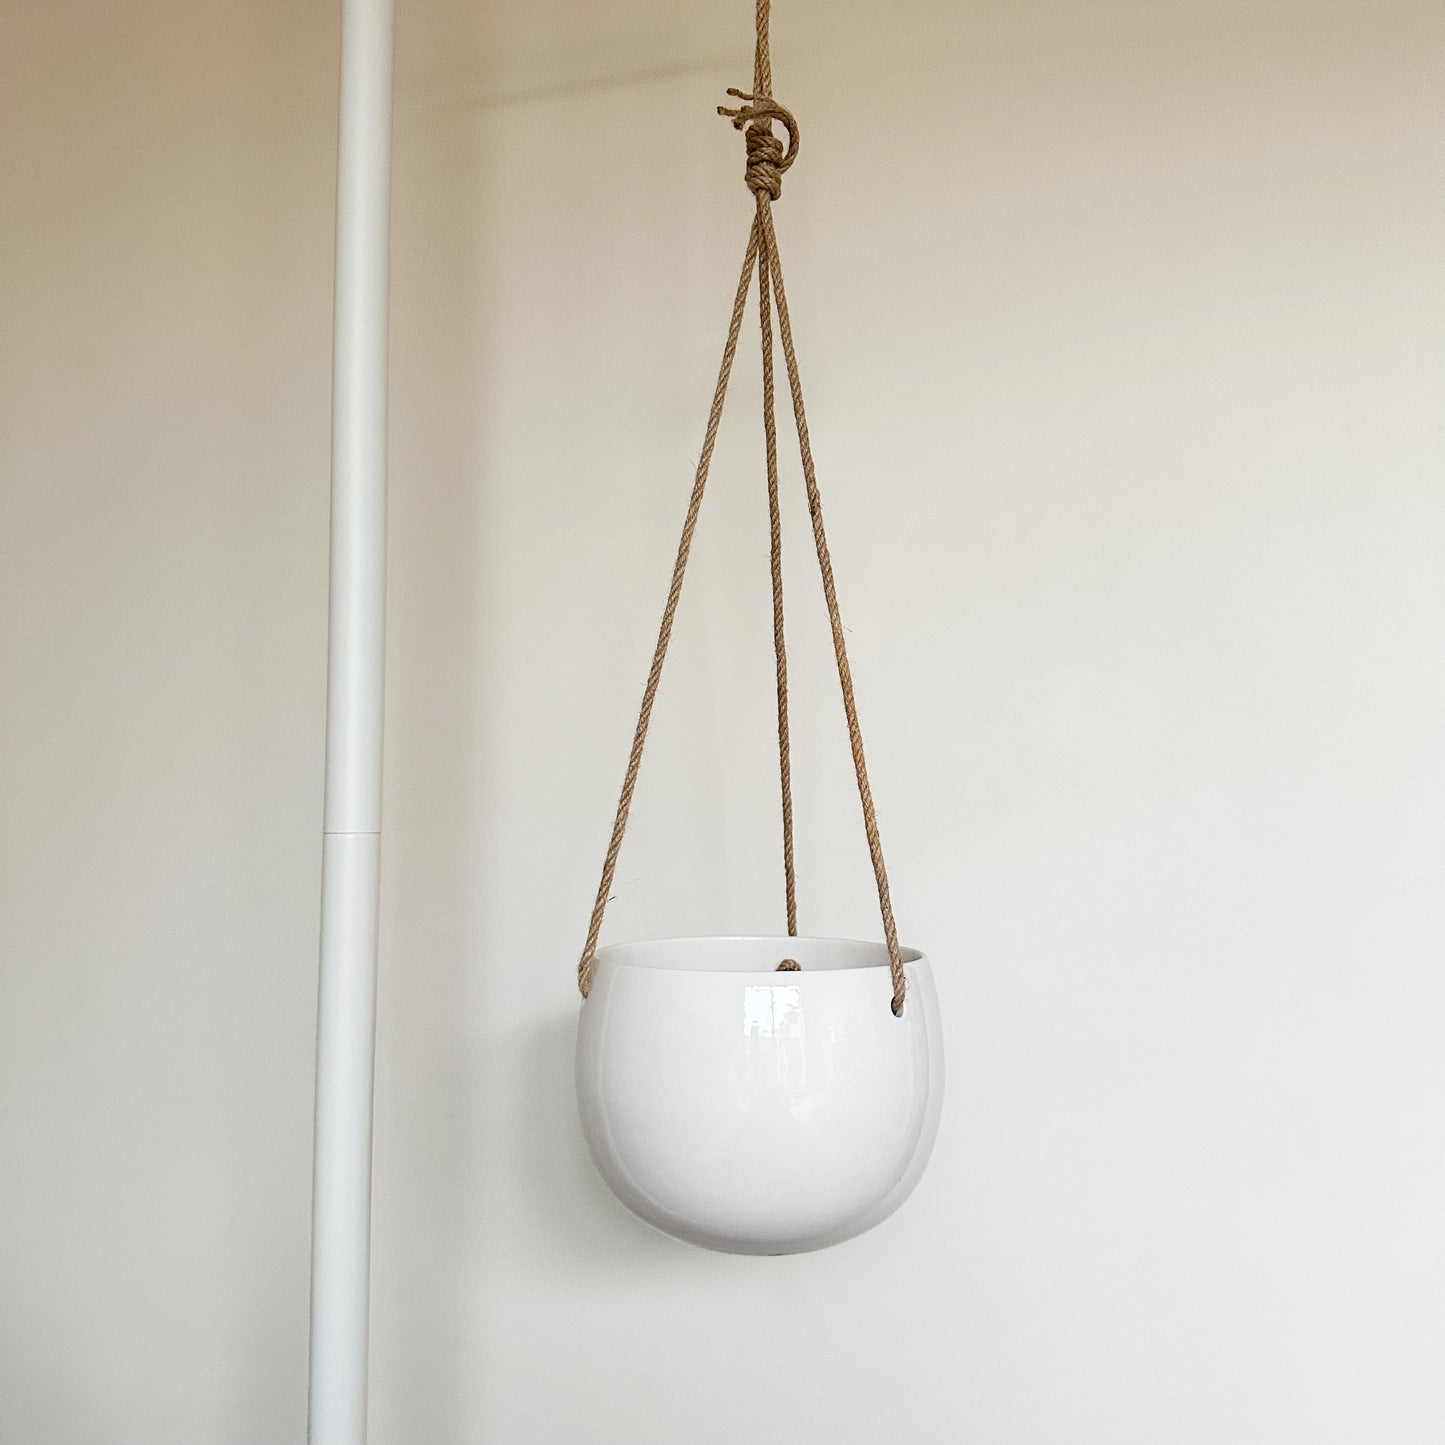 Lolly Ceramic Hanging Planter - Milky